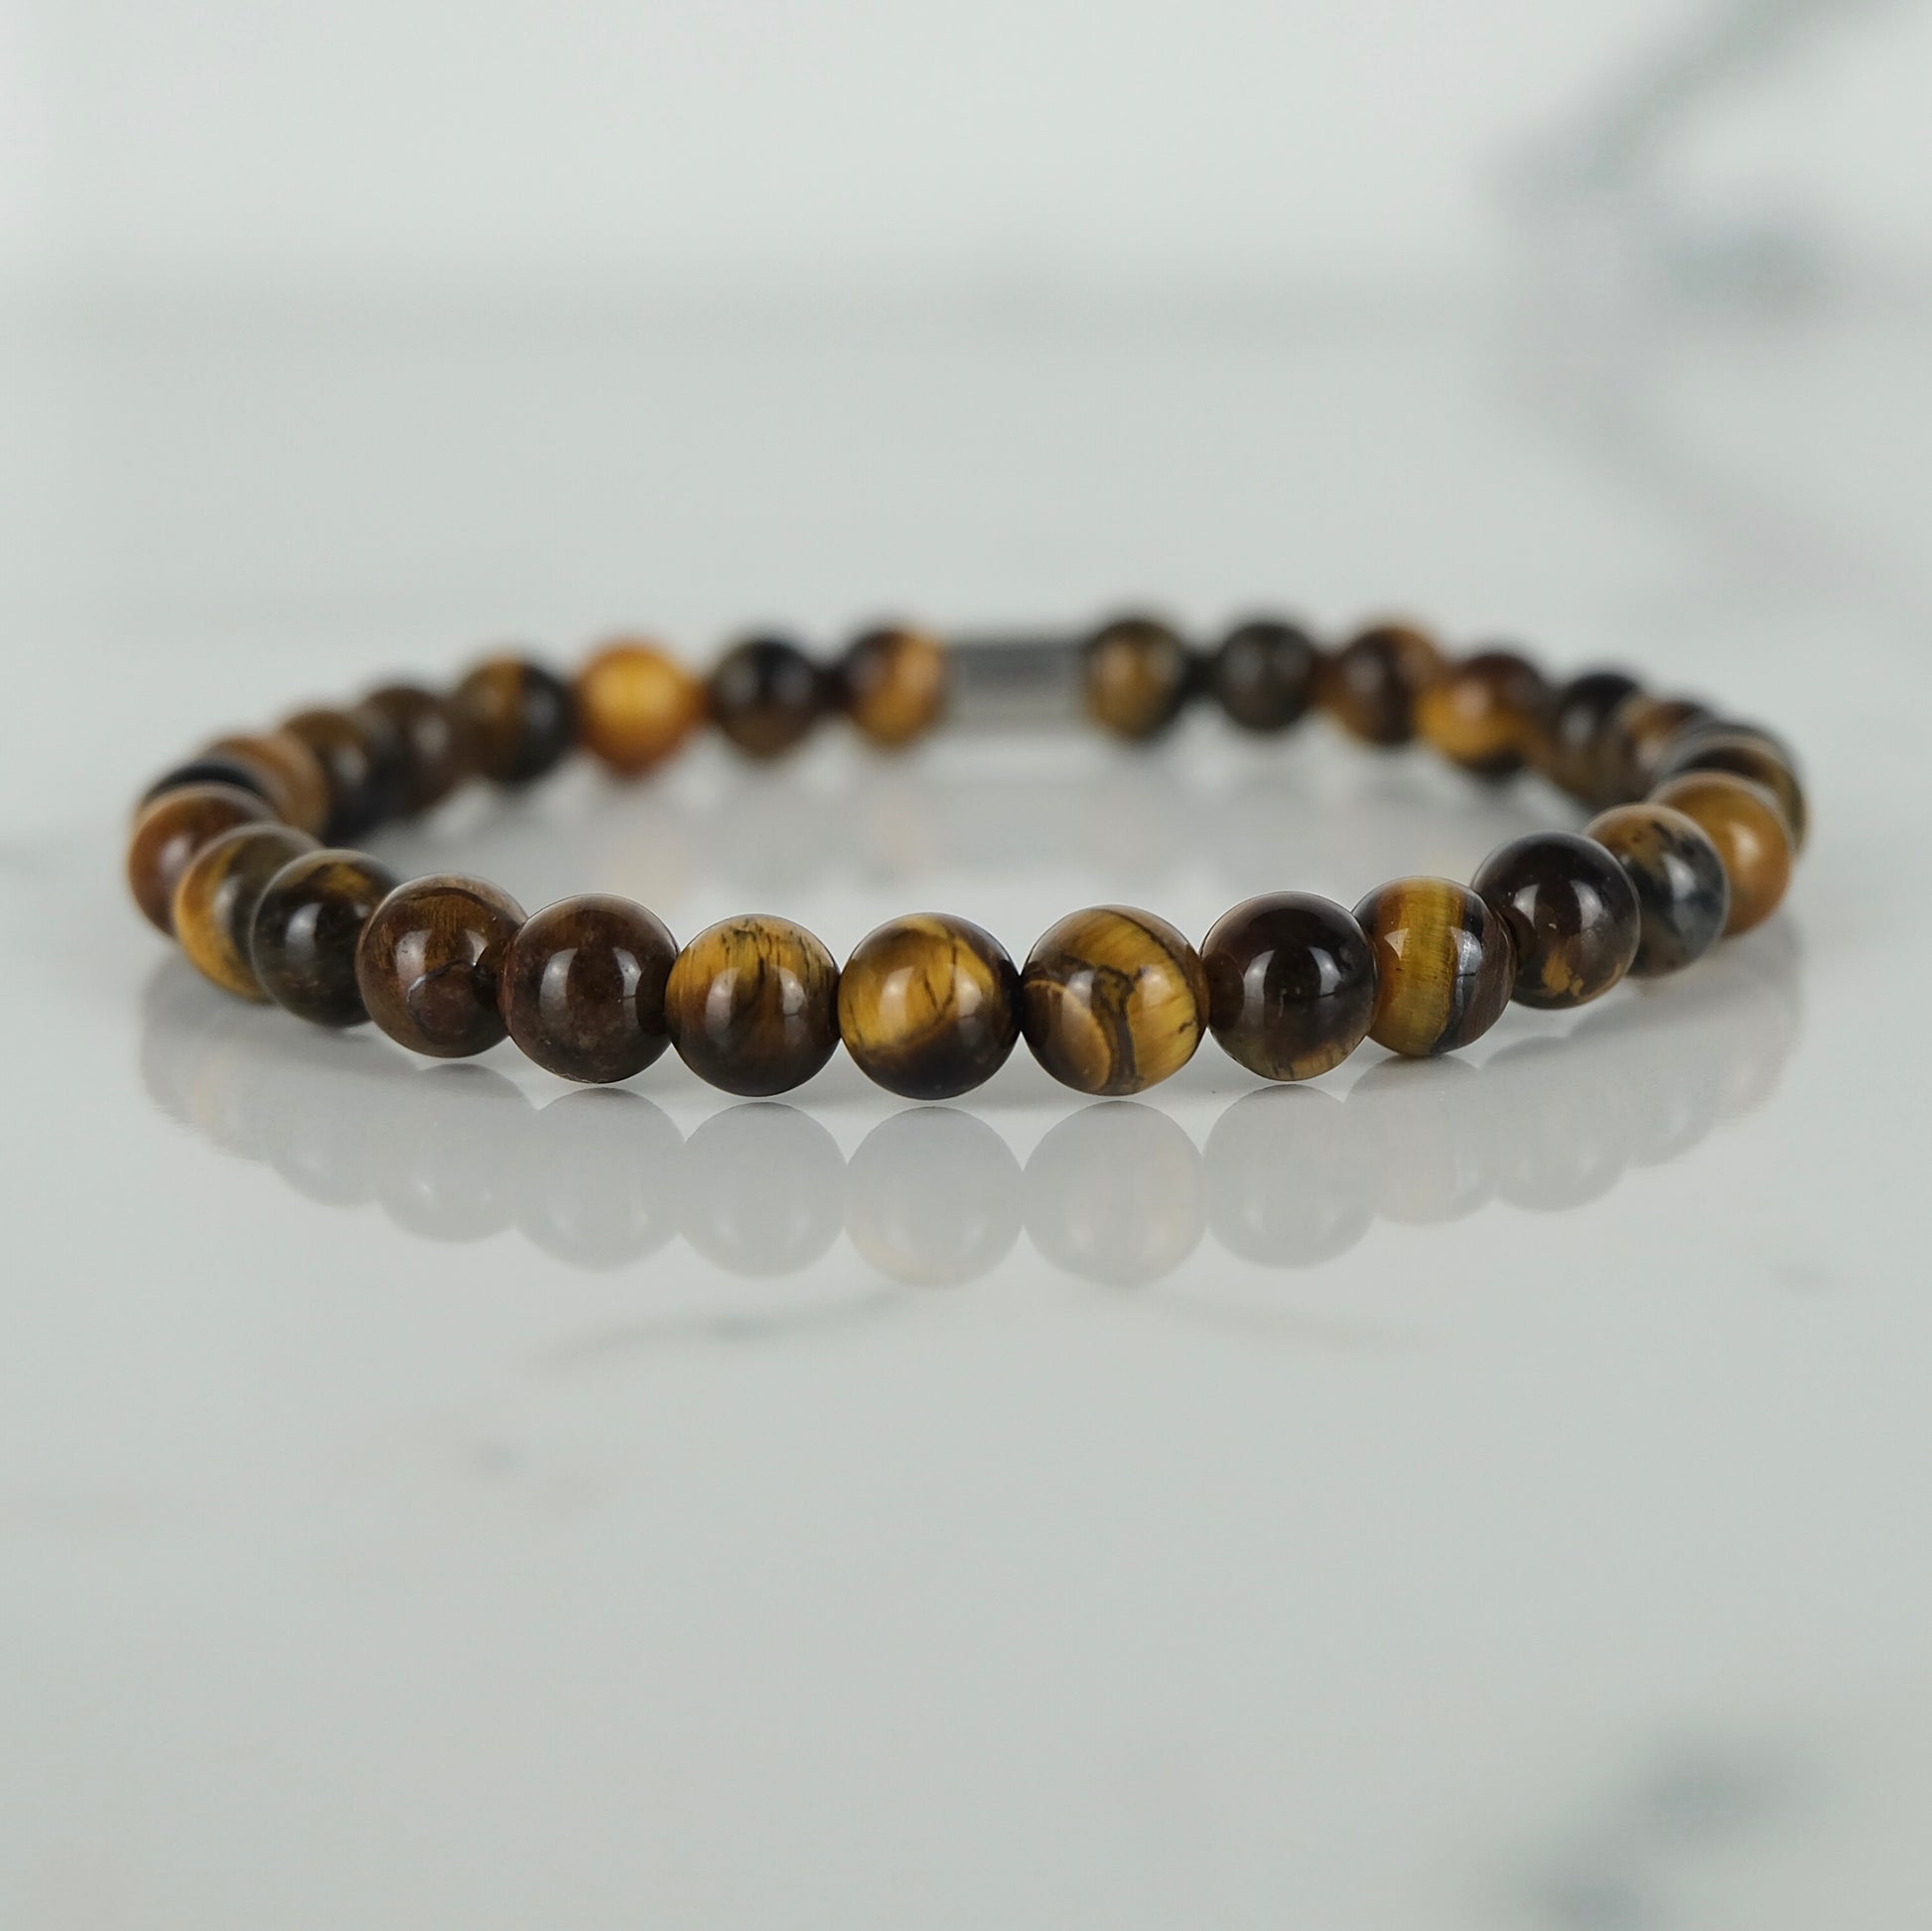 A tiger eye gemstone bracelet in 6mm beads with steel accessory